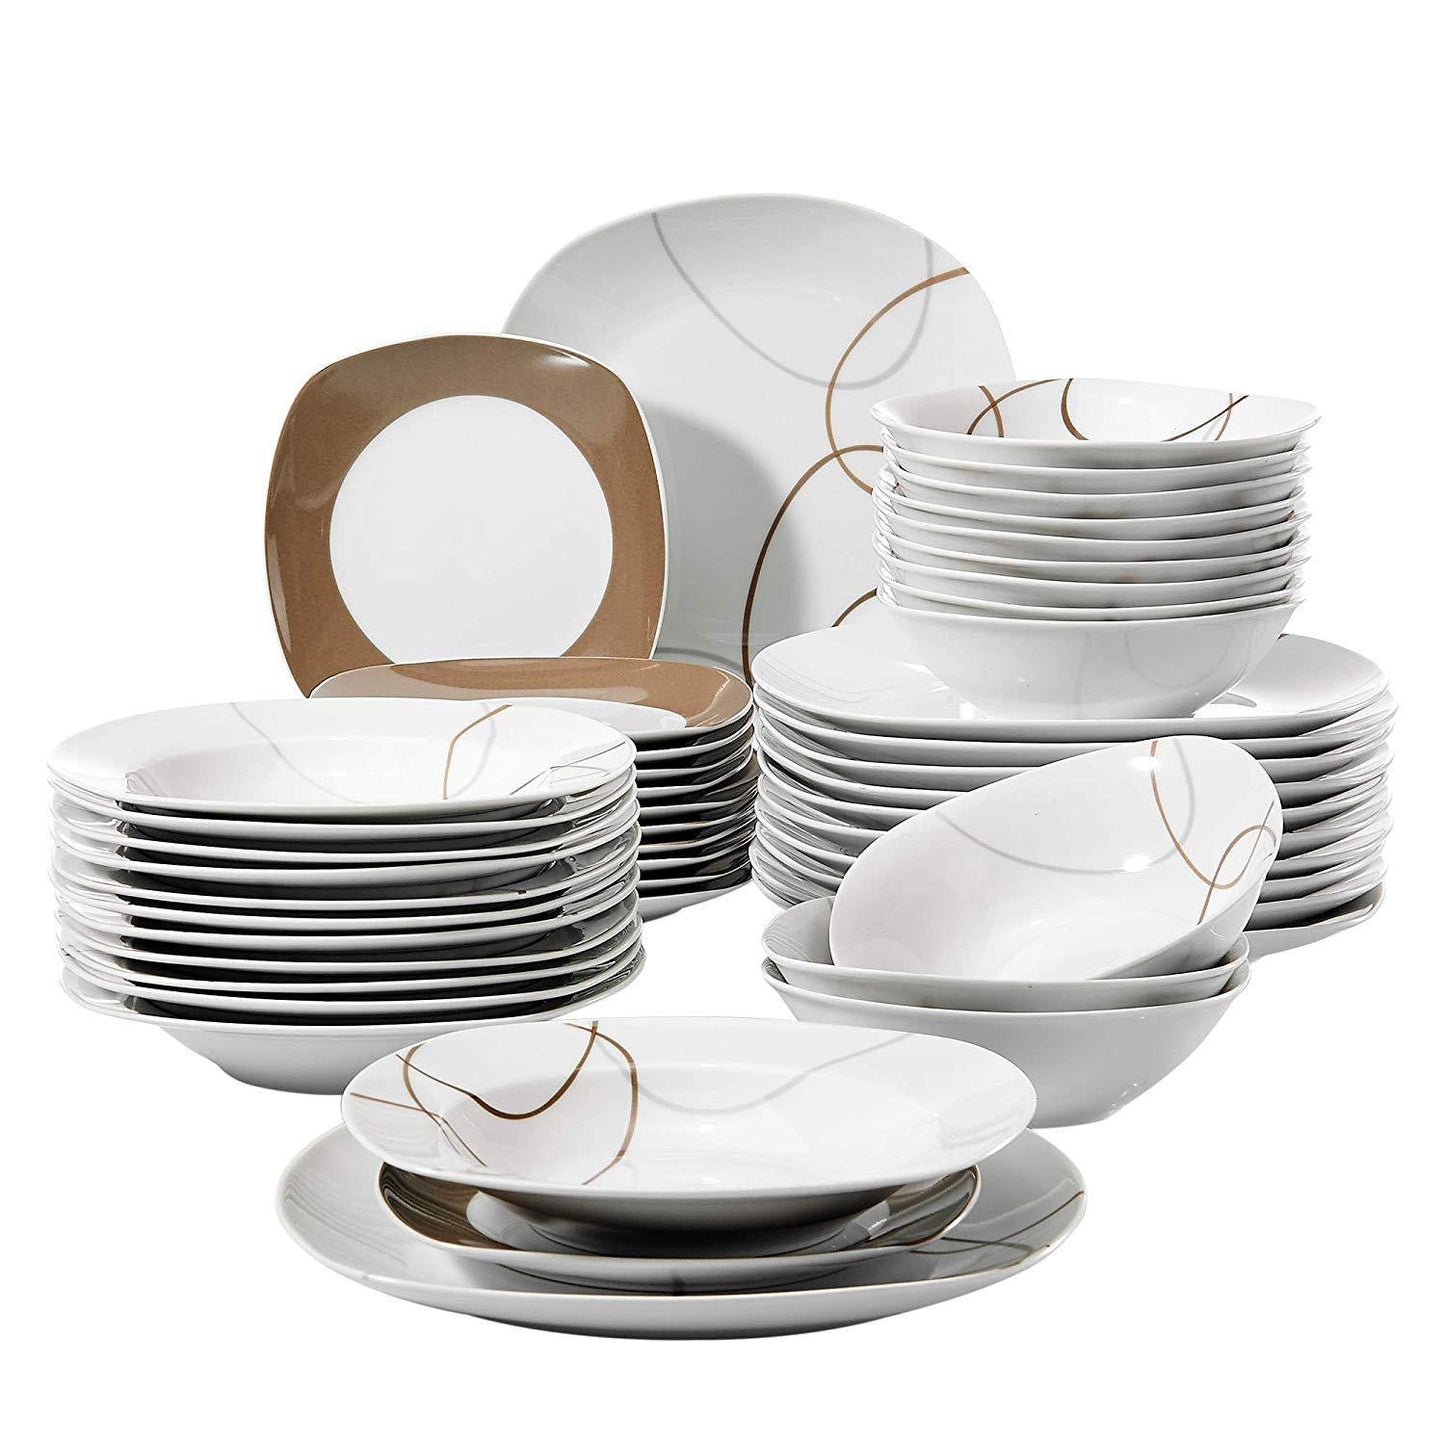 NIKITA 24-Piece Kitchen Dinner Combi-Set Porcelain Tableware Plate Set with Bowls,Dessert Plate,Soup Plates,Dinner Plate - Nordic Side - 24, BowlsDessert, CombiSet, Dinner, Kitchen, NIKITA, P